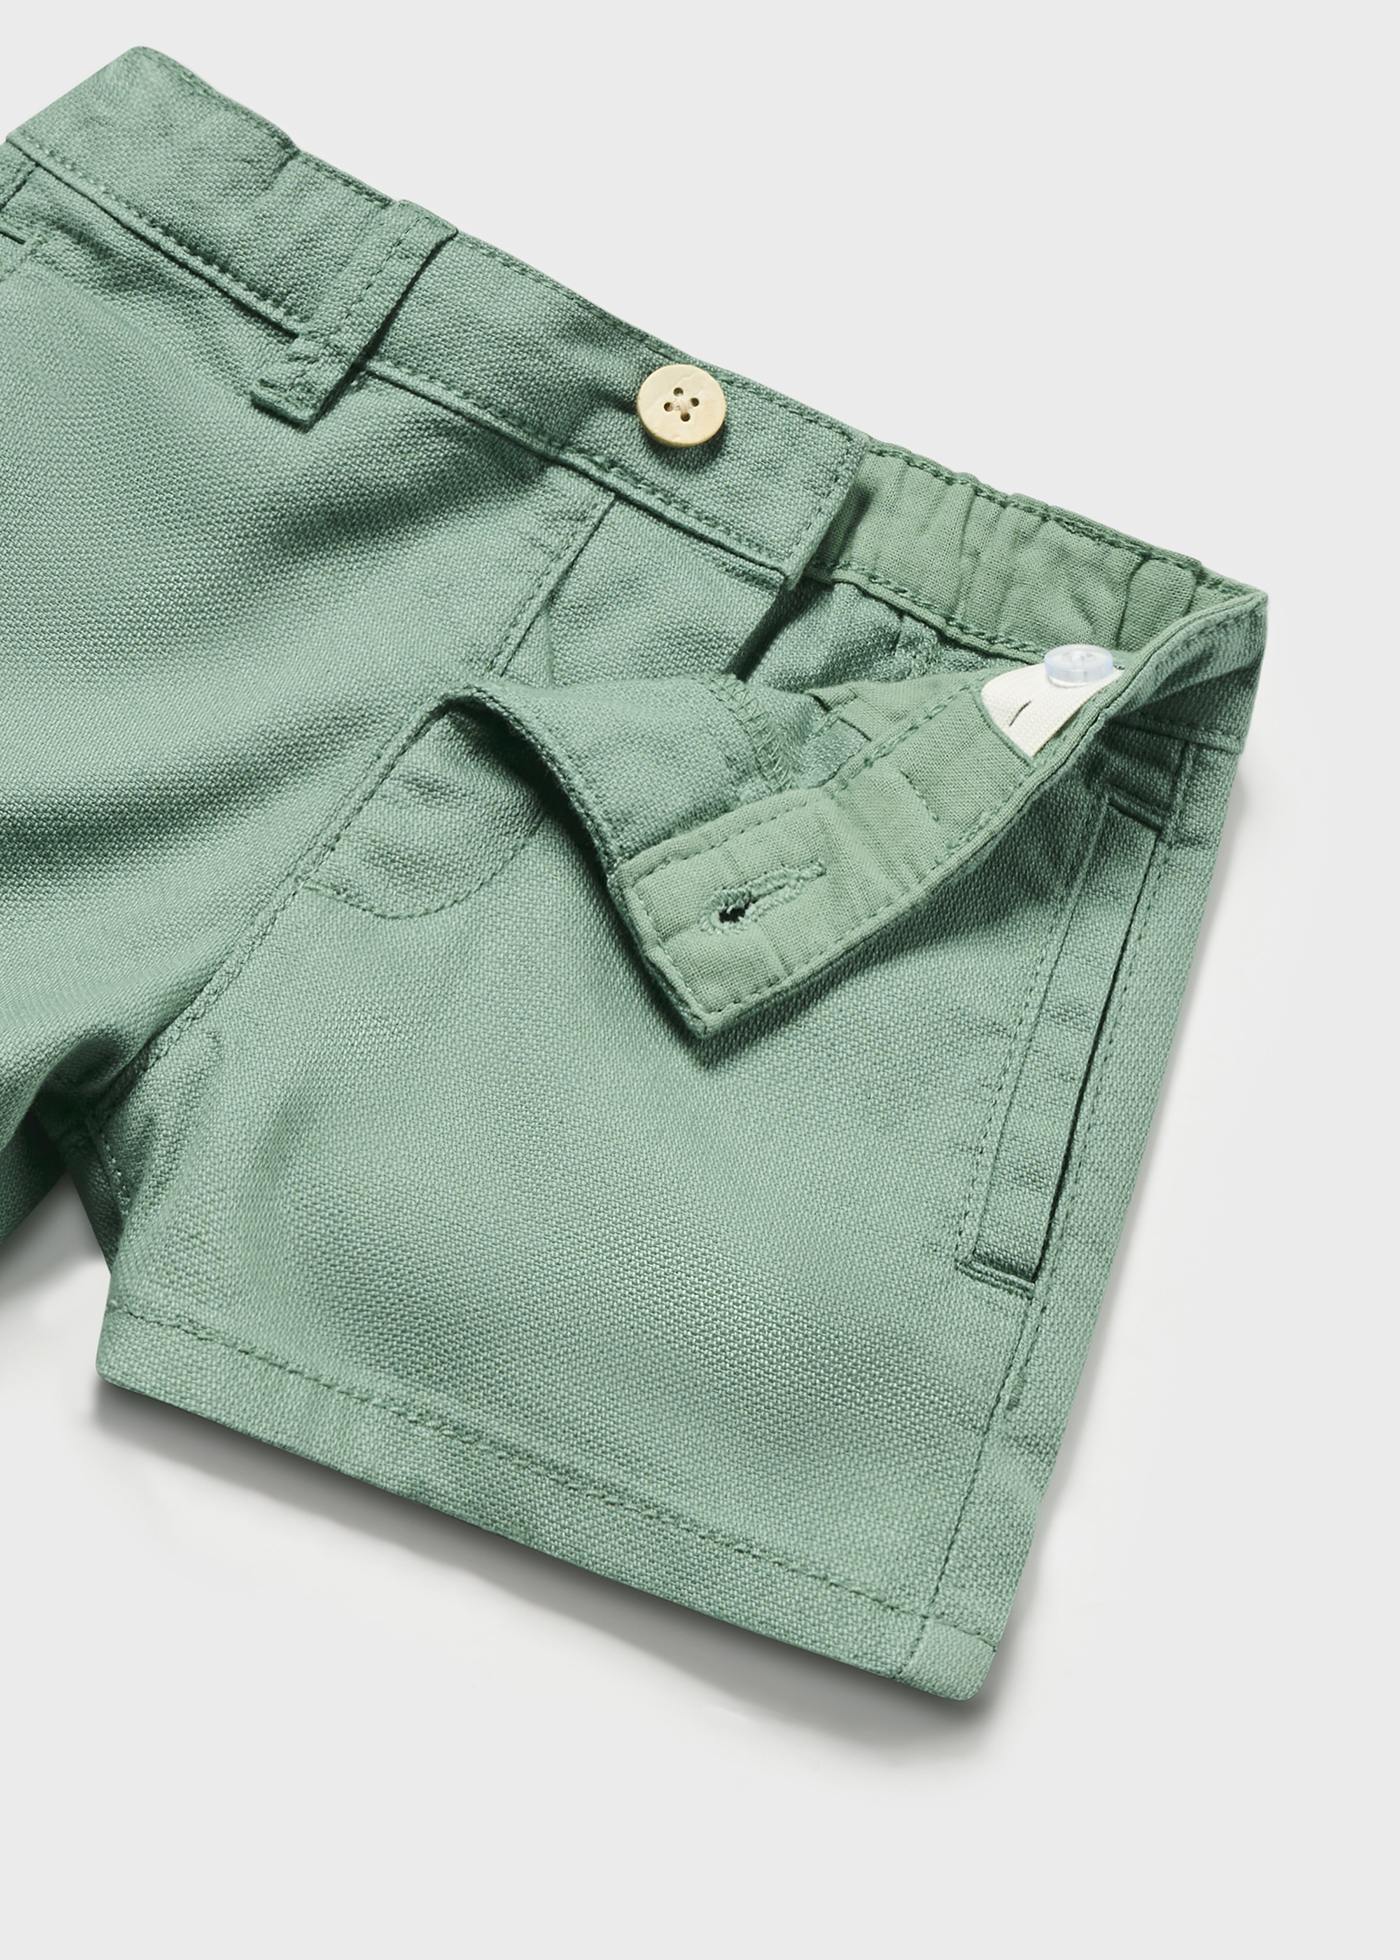 Baby Bermuda Structured Shorts Better Cotton